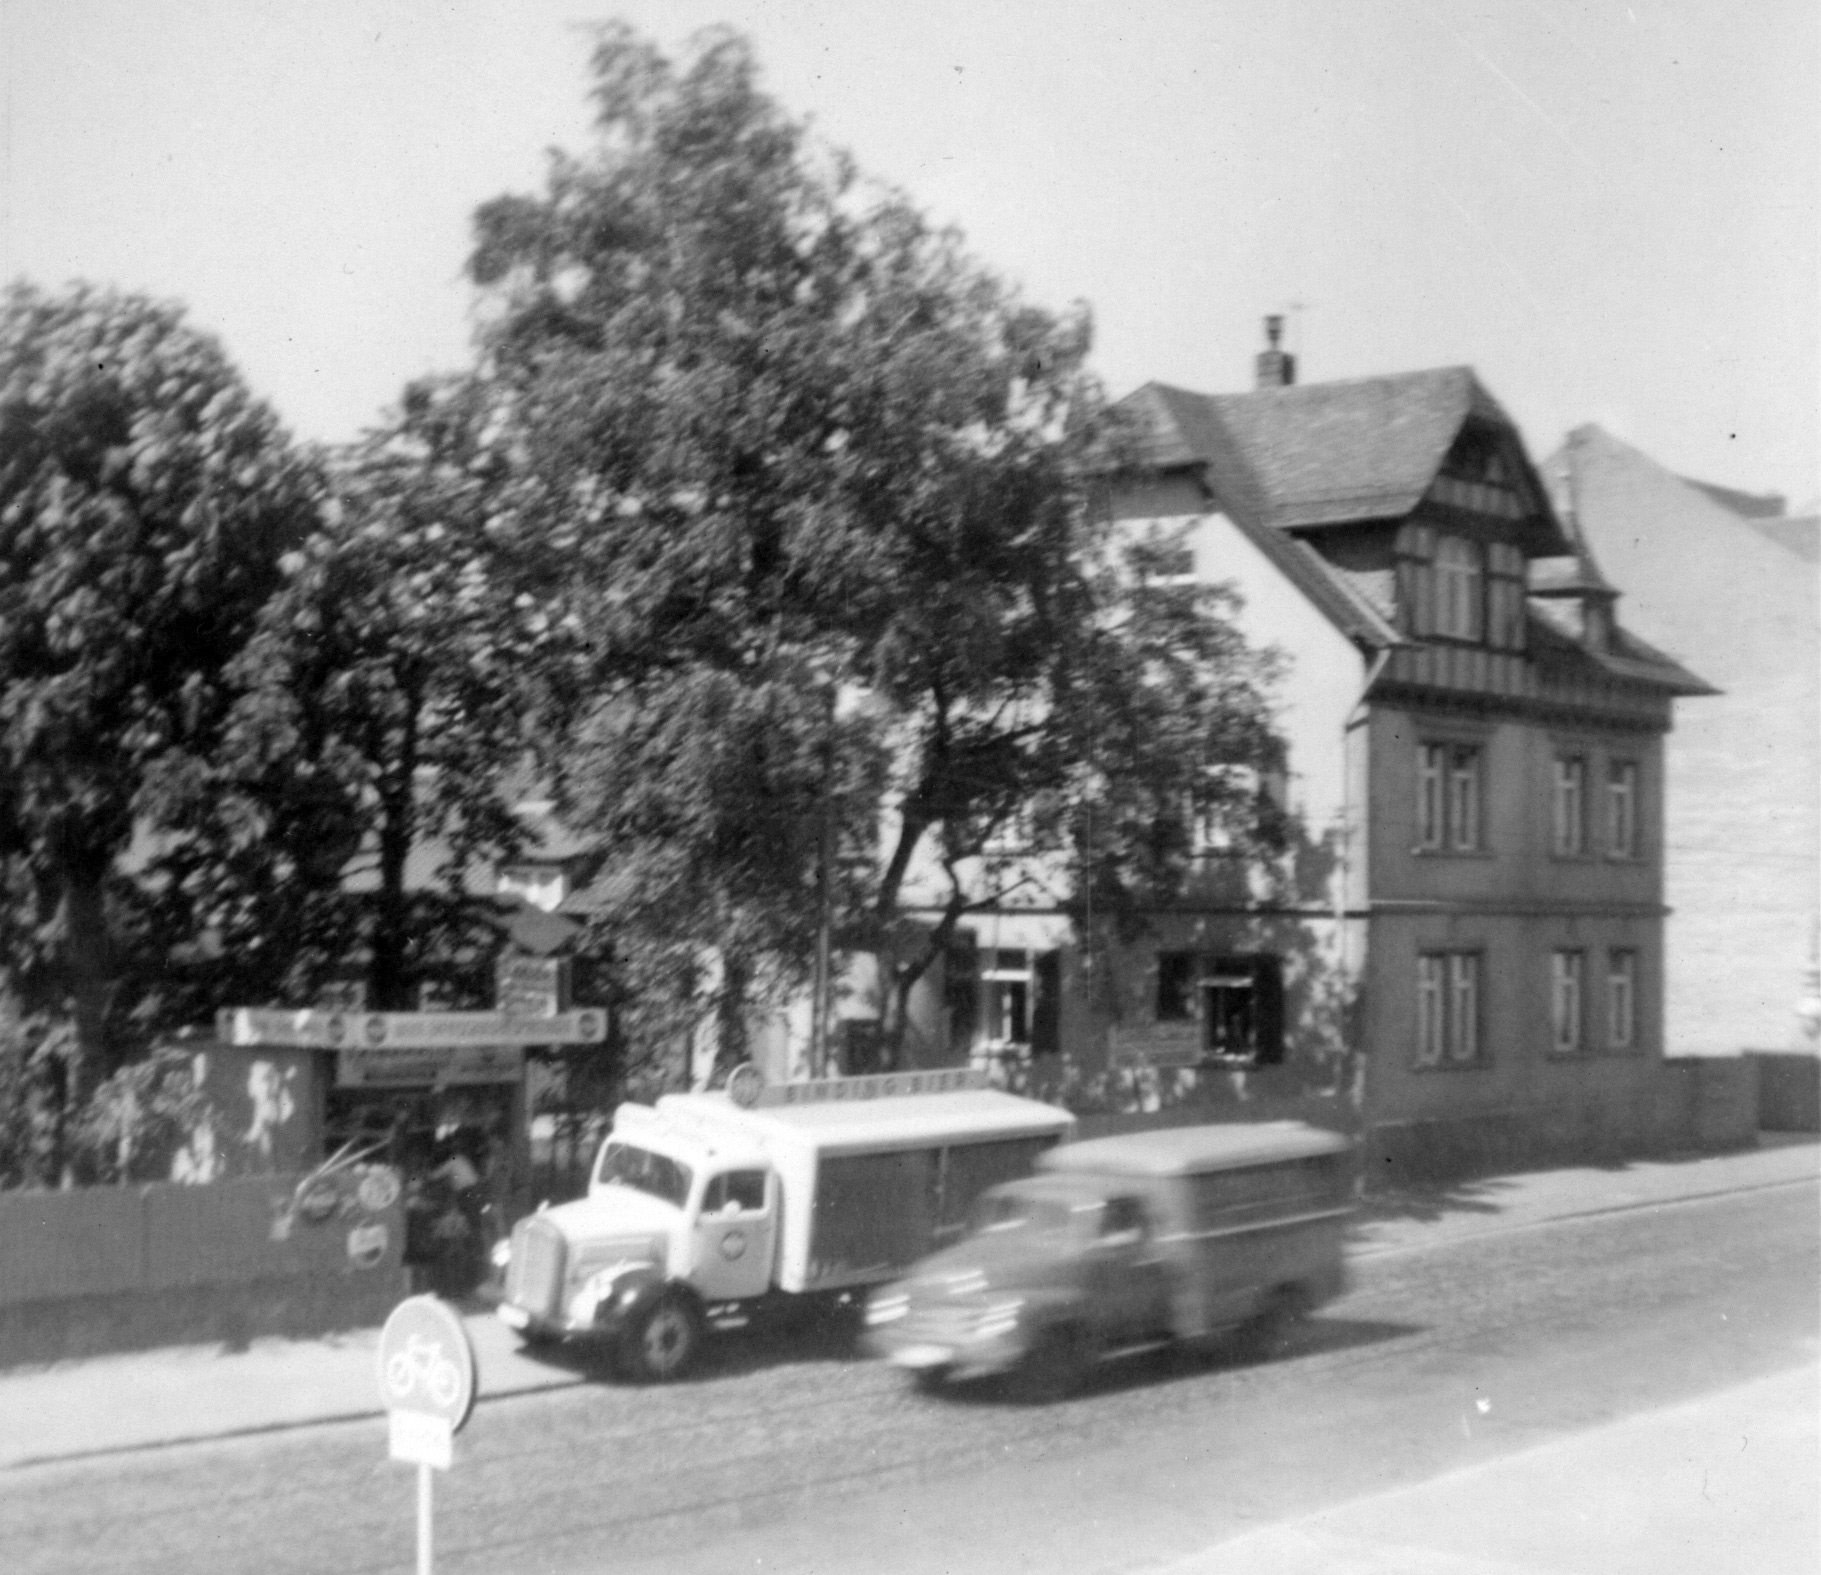 Raimundstraße Trinkhalle and beer truck 1959